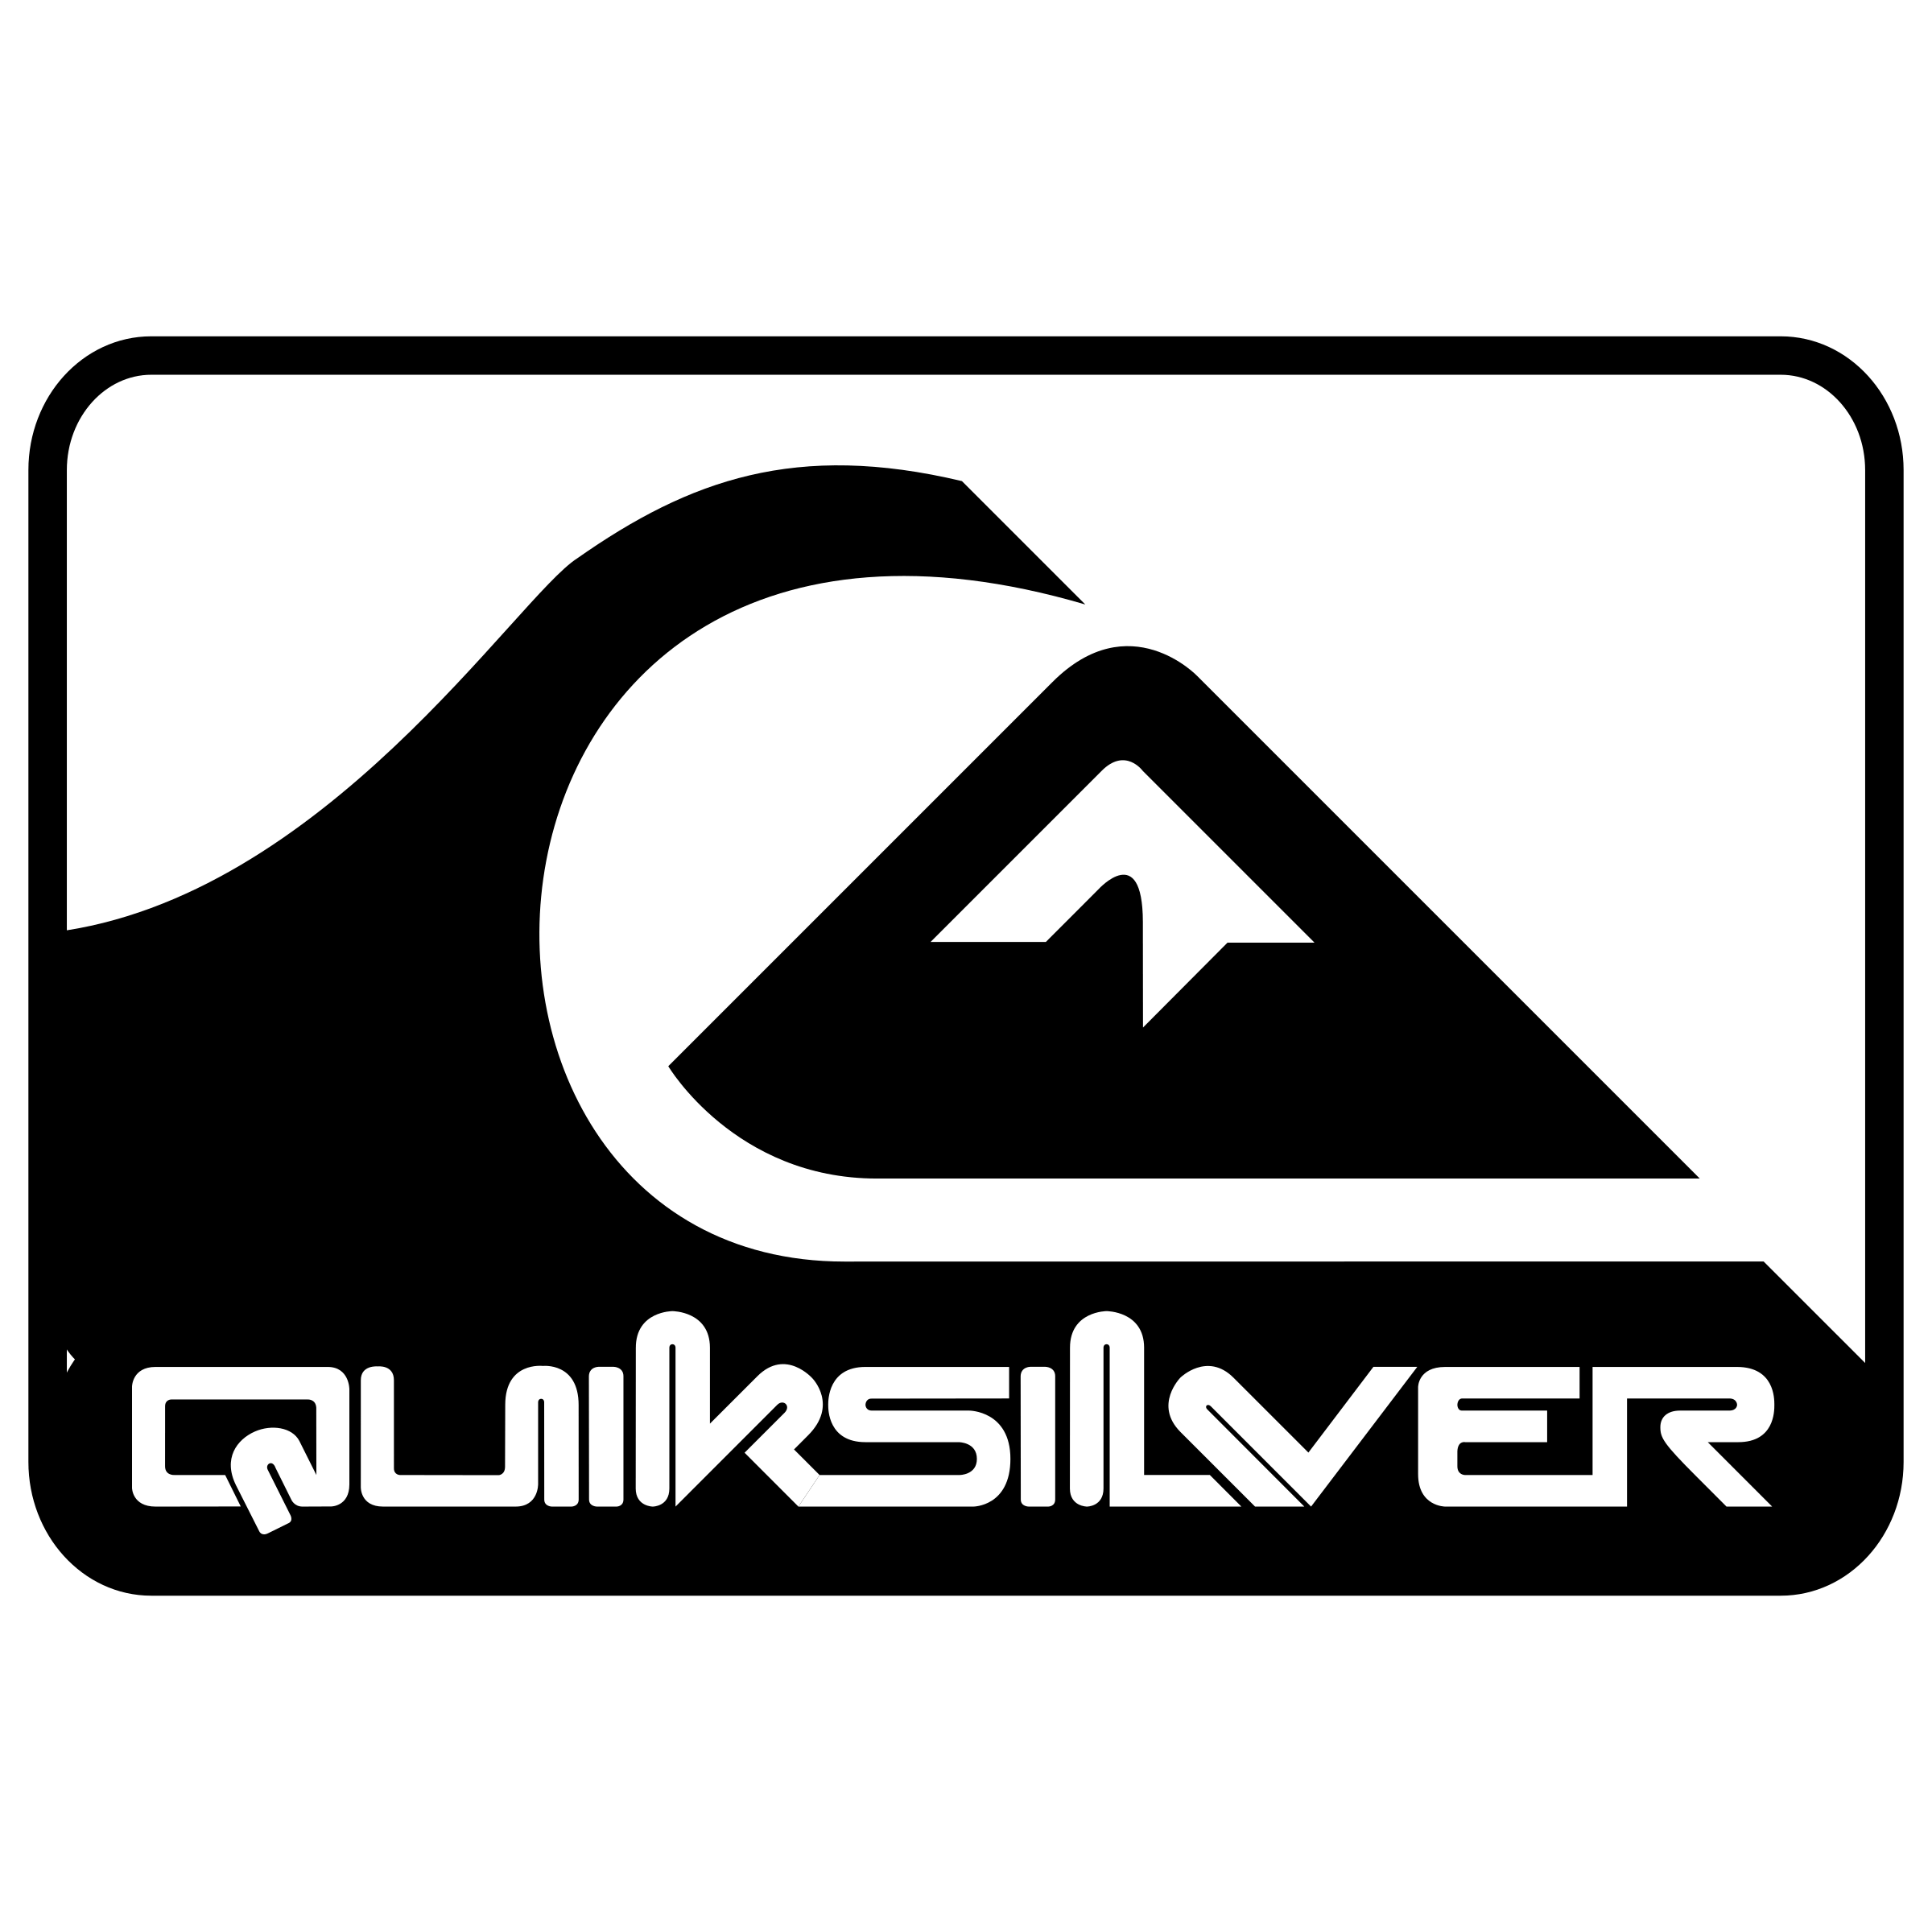 Quiksilver Logo - Quiksilver Logo PNG Transparent & SVG Vector - Freebie Supply